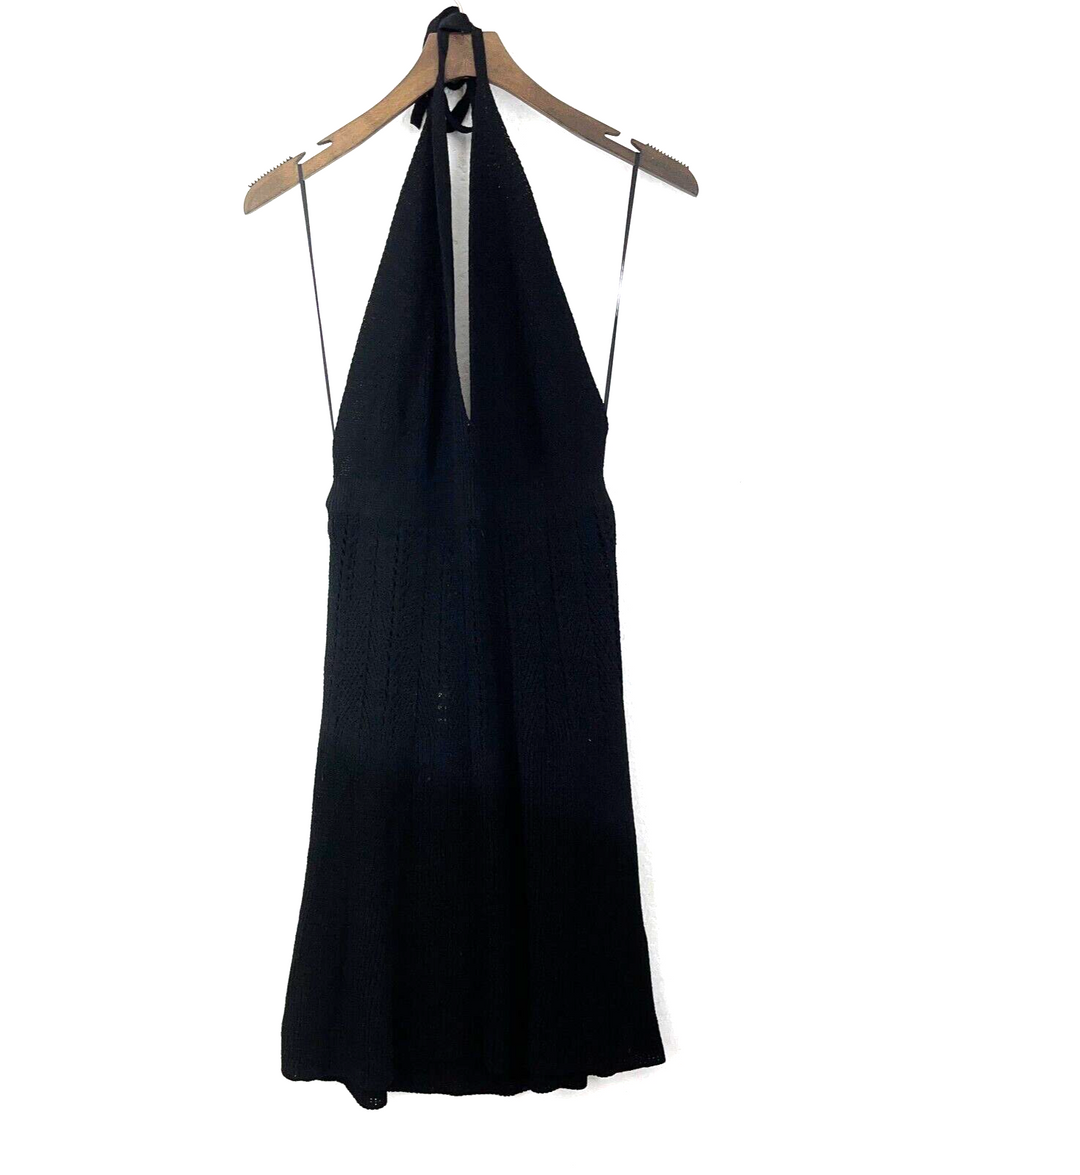 ZARA Halter Neck Black Knit Dress Size M NWT